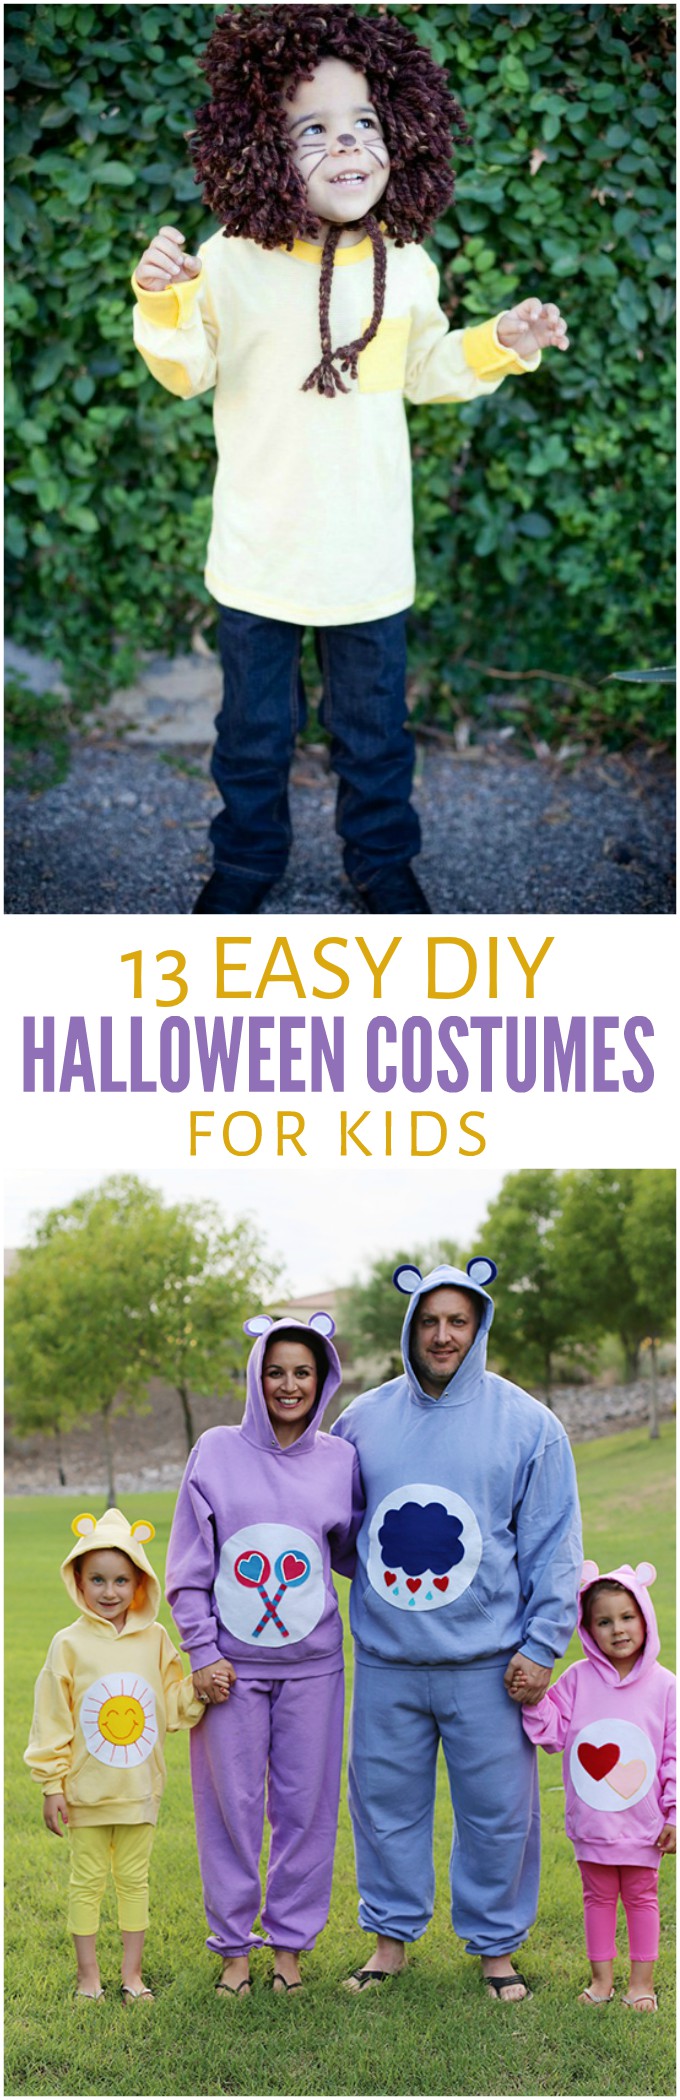 13 Easy DIY Halloween Costumes for Kids